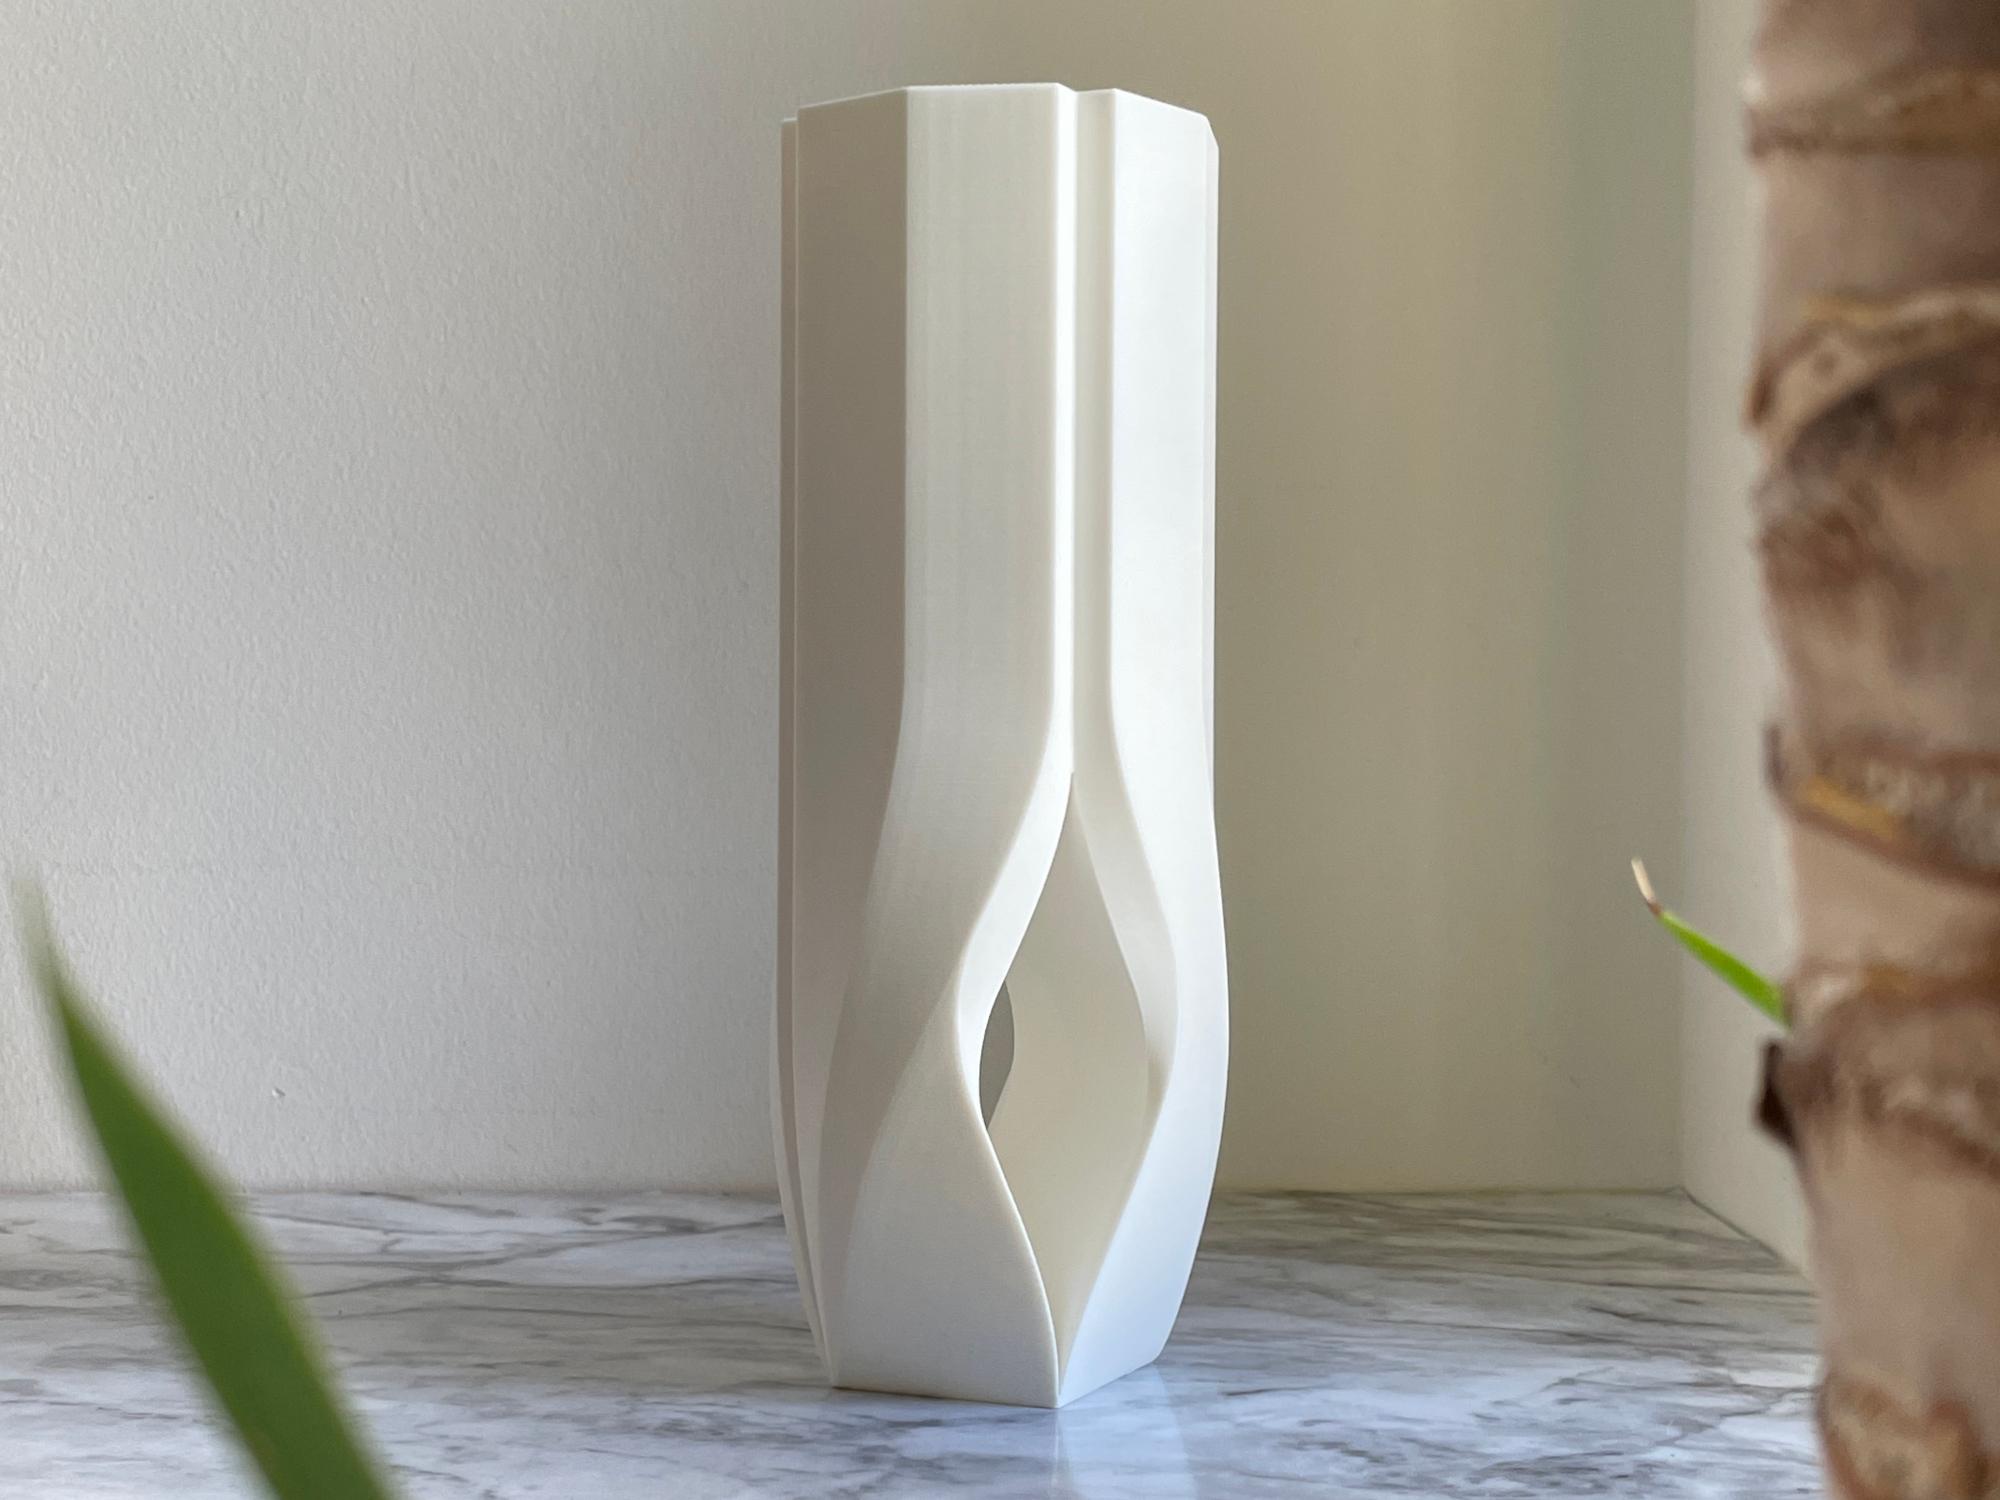 Venus, flower vase. 3d model